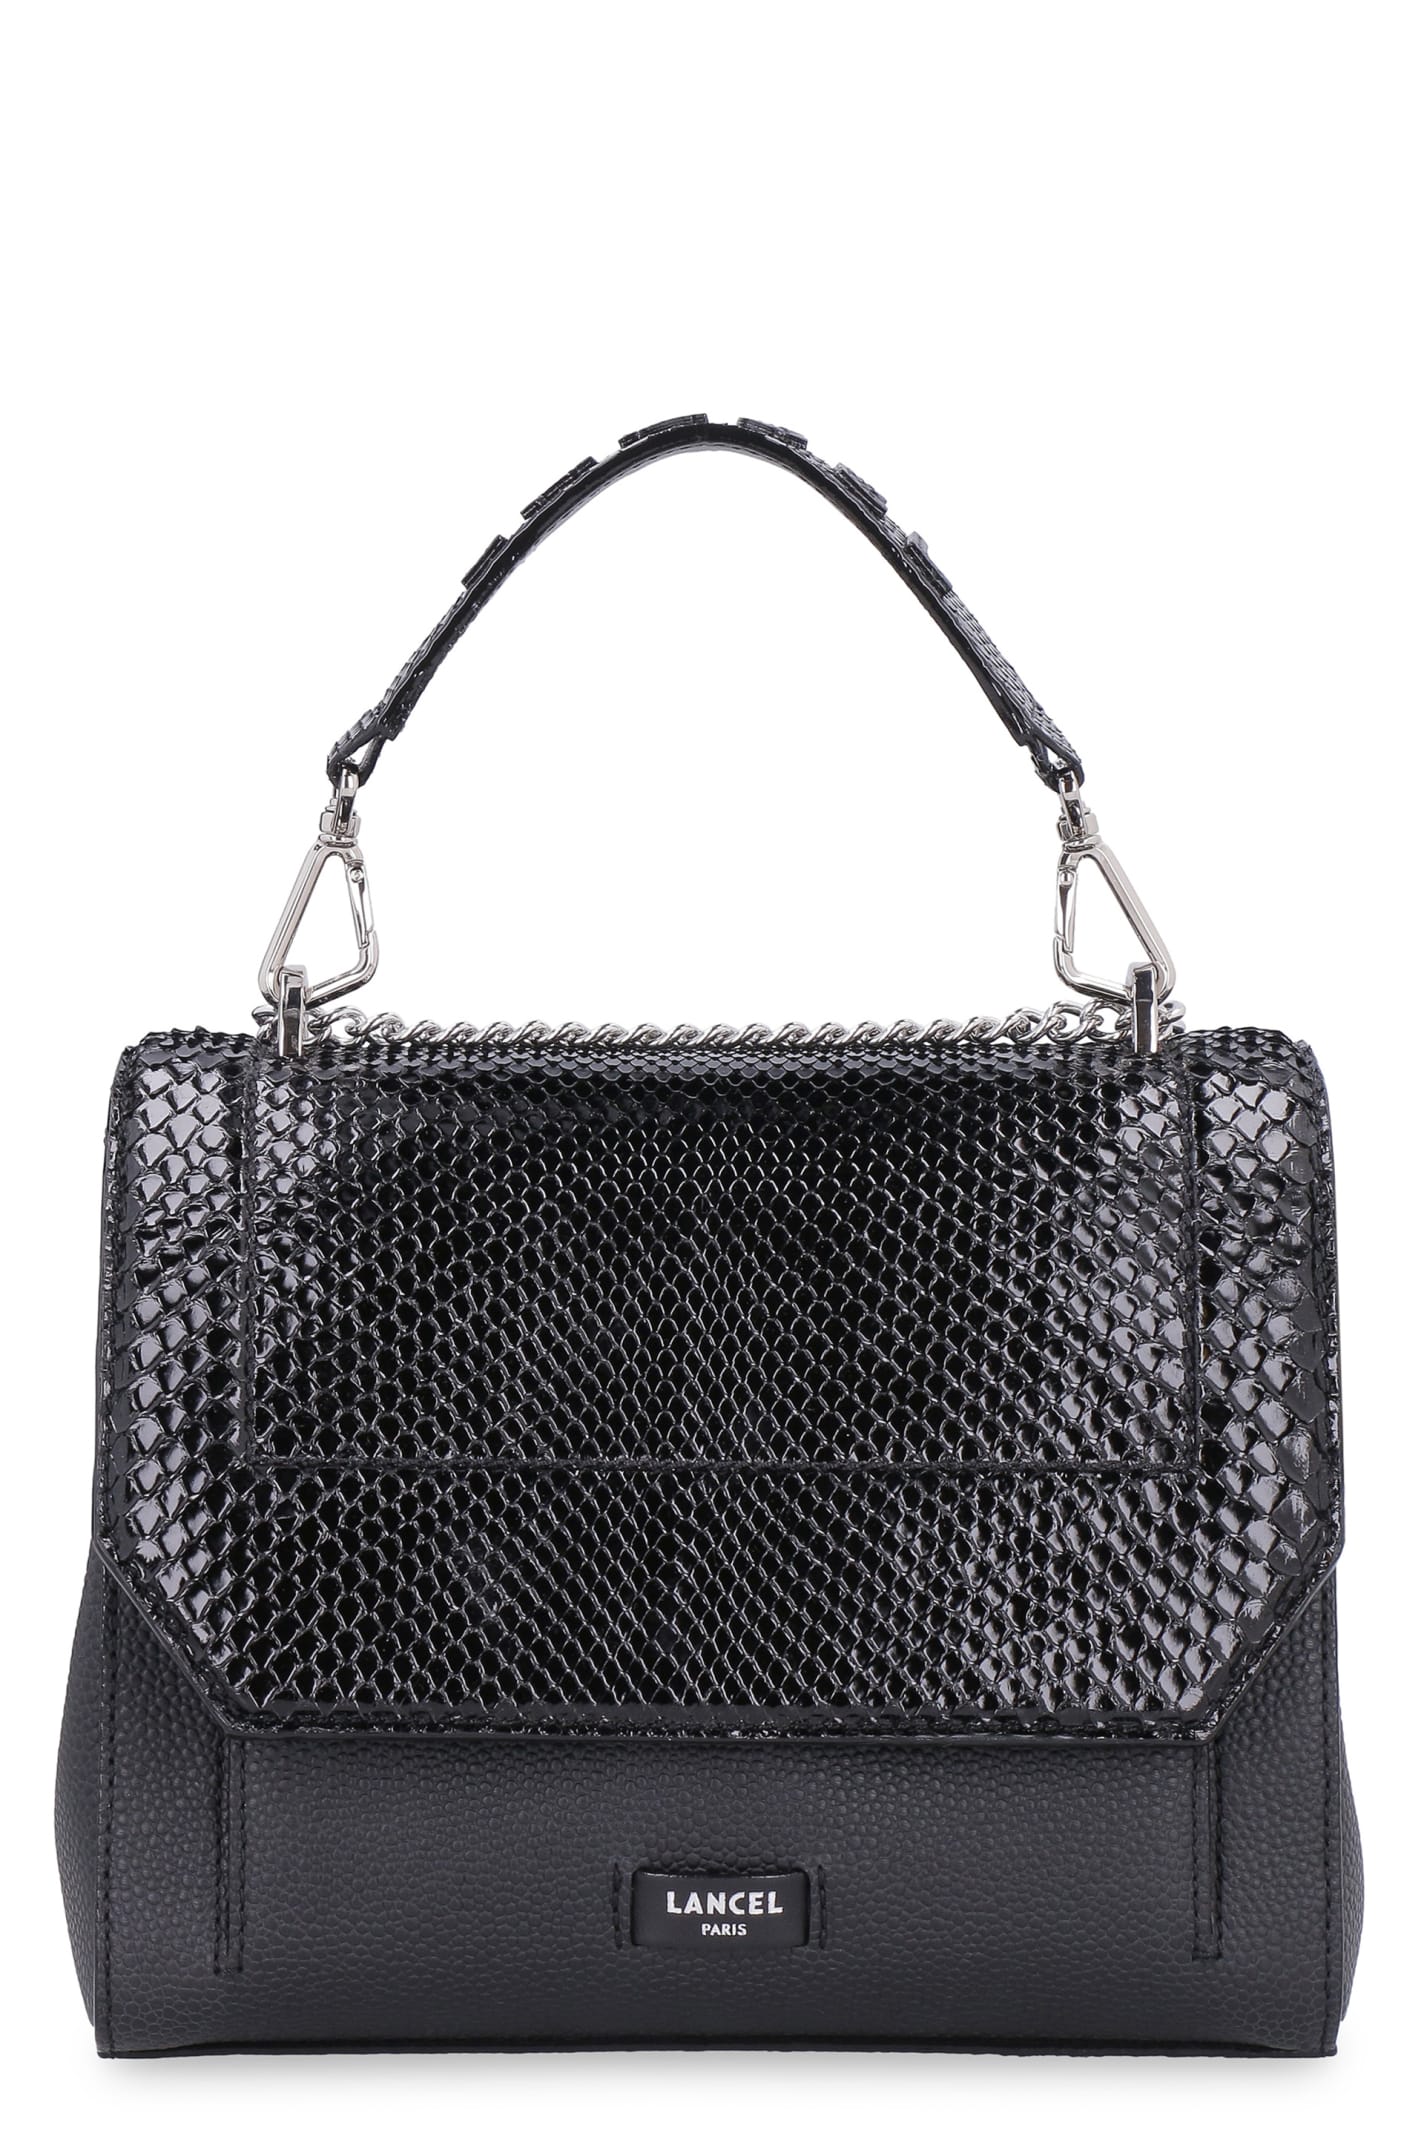 Lancel Ninon Leather Handbag